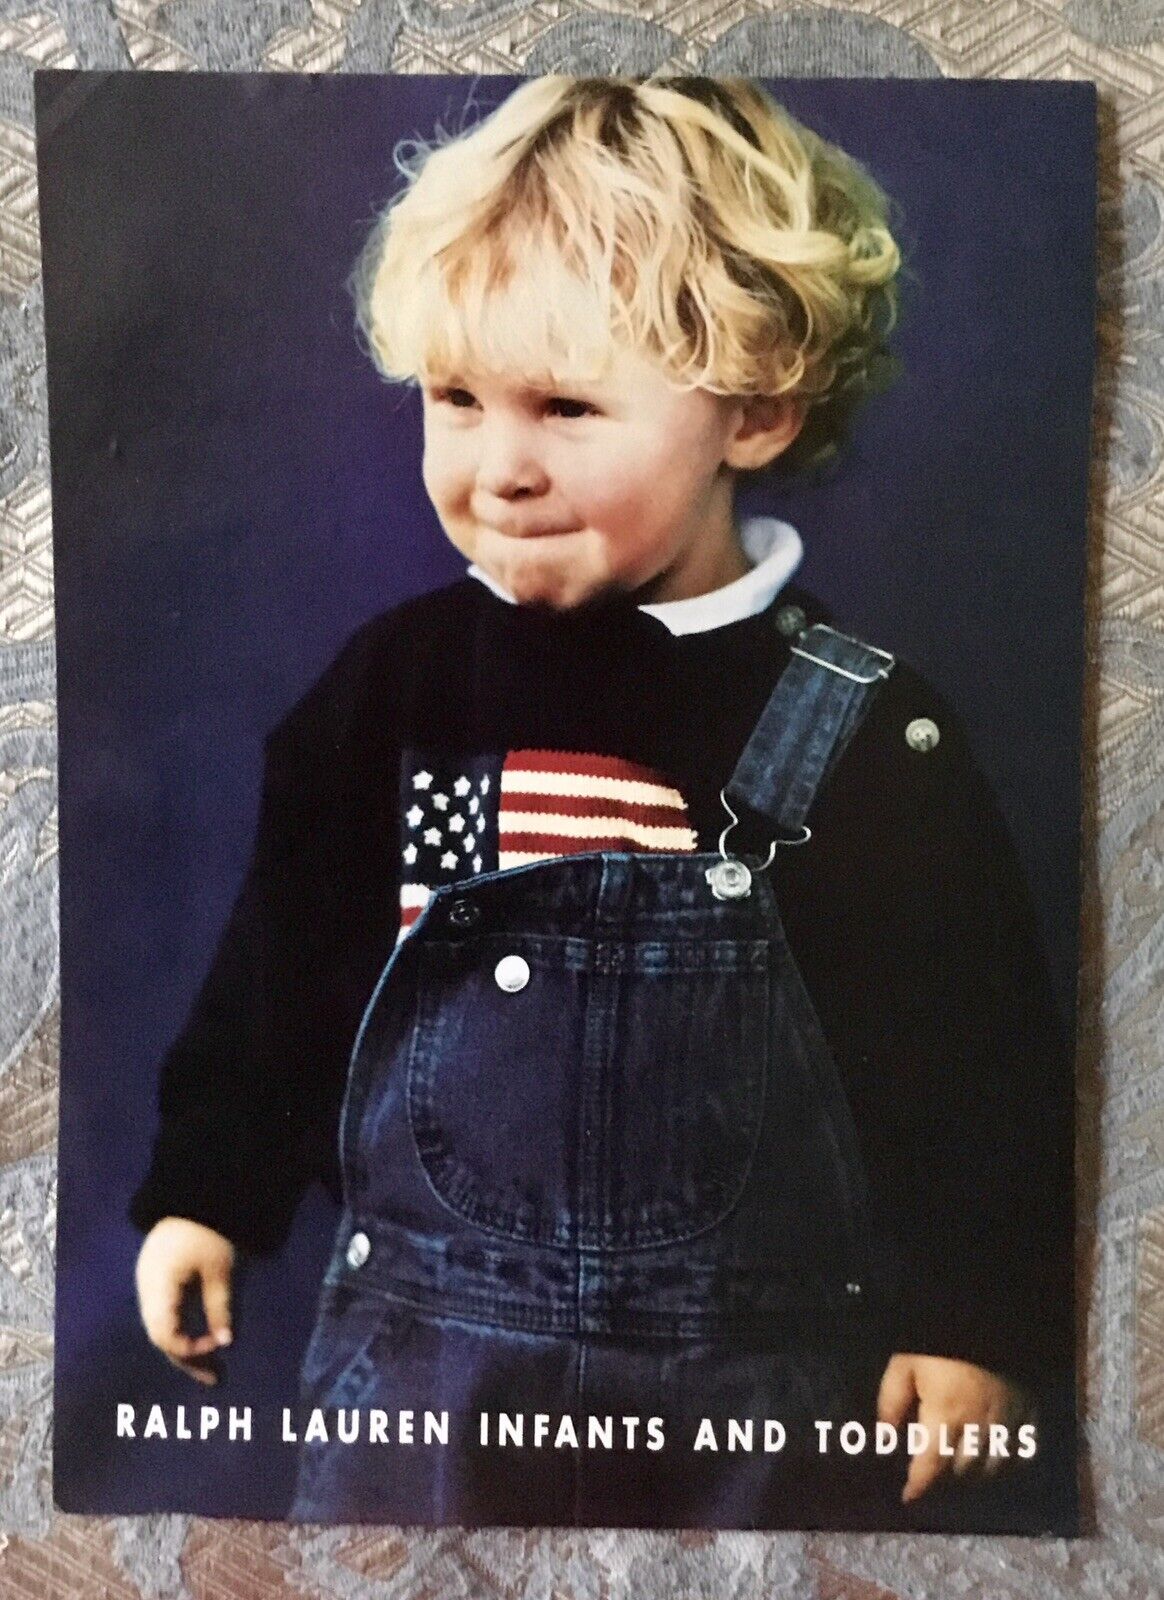 VTG 1990 Ralph Lauren Toddlers Print Advertisement - Boy + Flag Sweater/Overalls